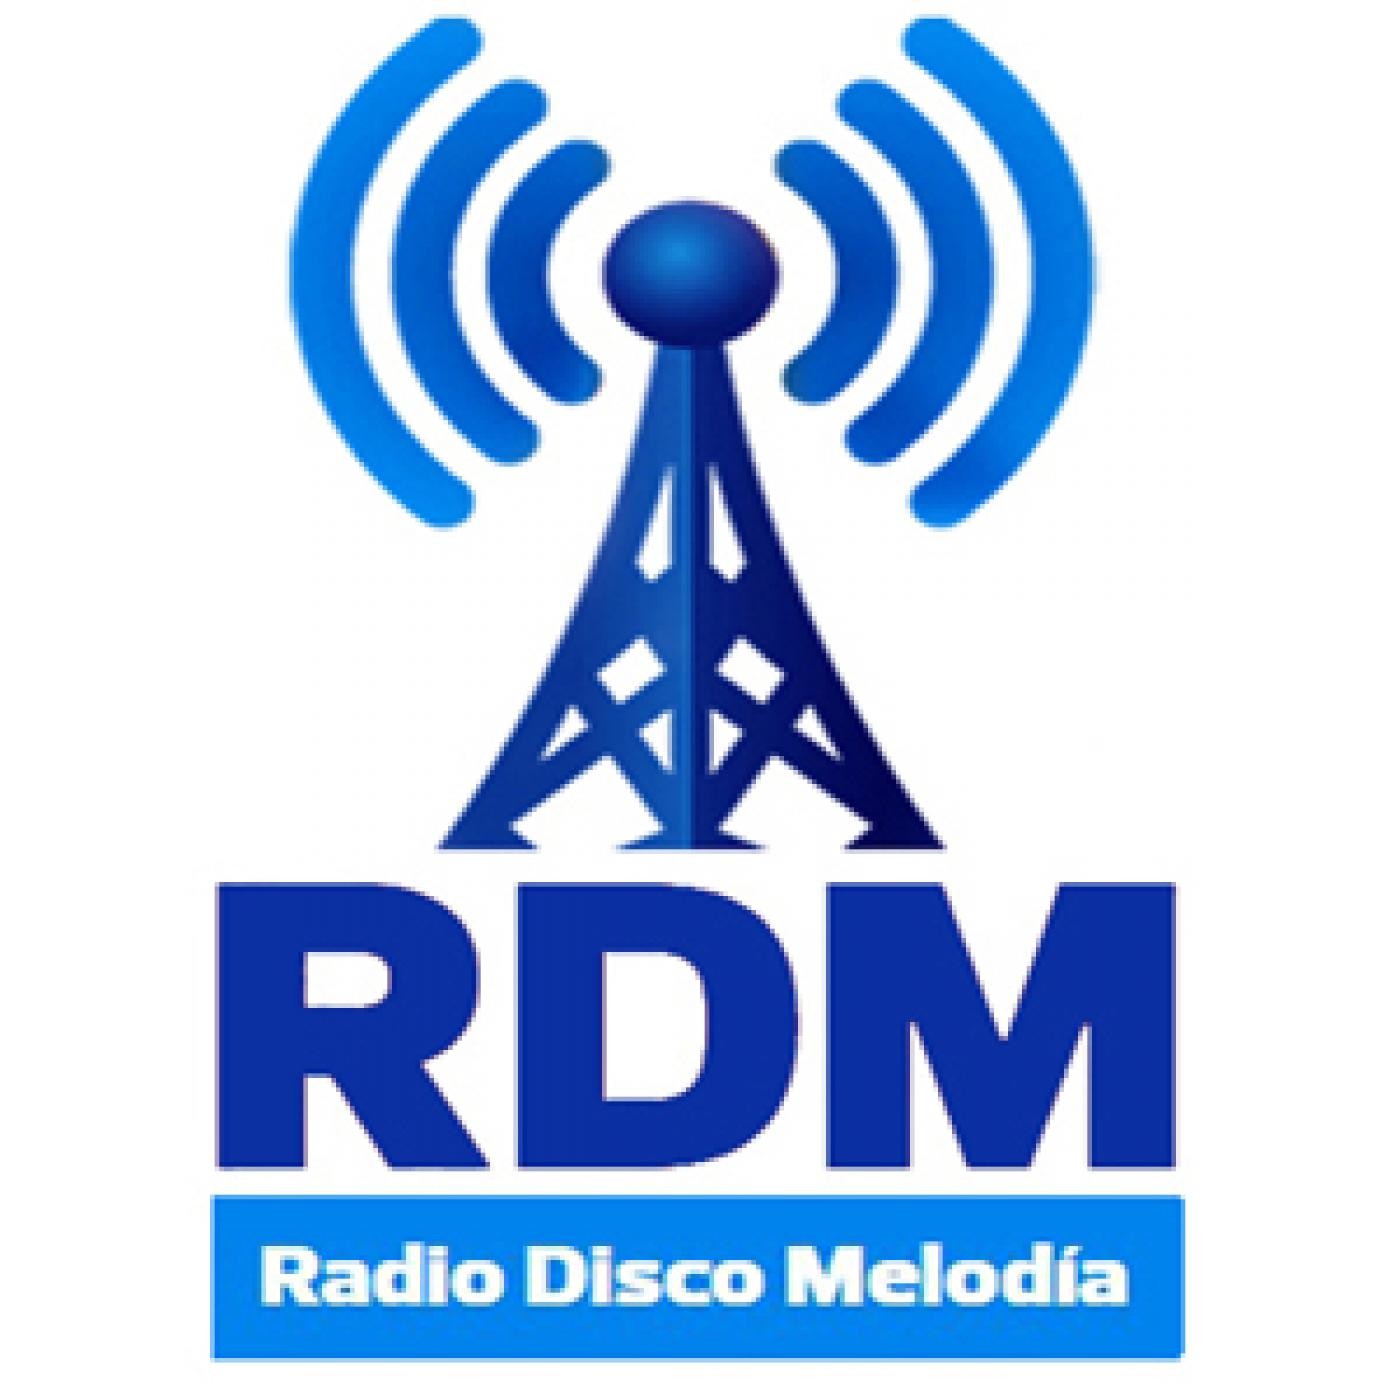 PODCAST RADIO DISCO MELODIA